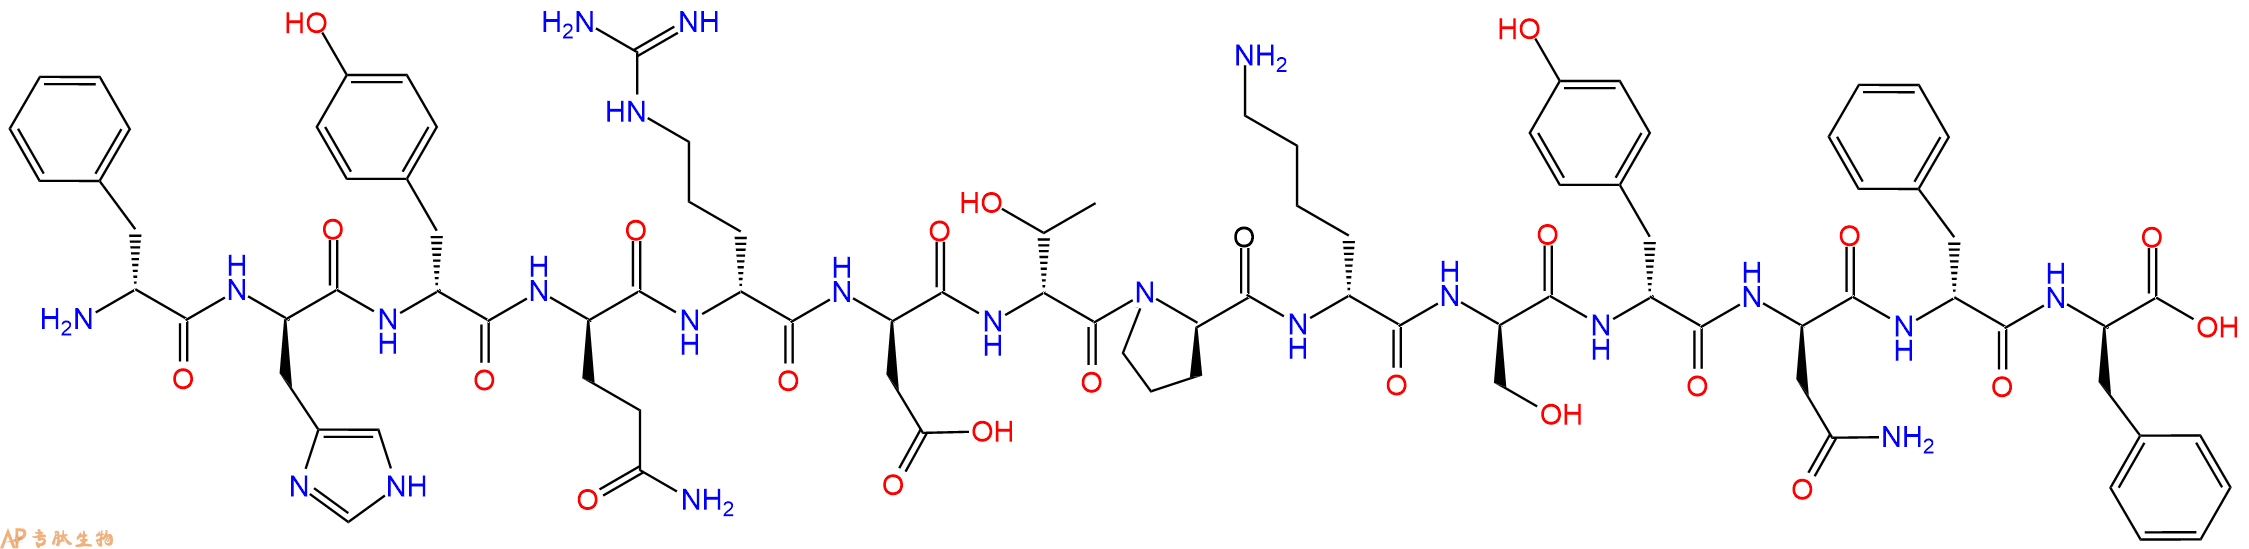 专肽生物产品DPhe-DHis-DTyr-DGln-DArg-DAsp-DThr-DPro-DLys-DSer-